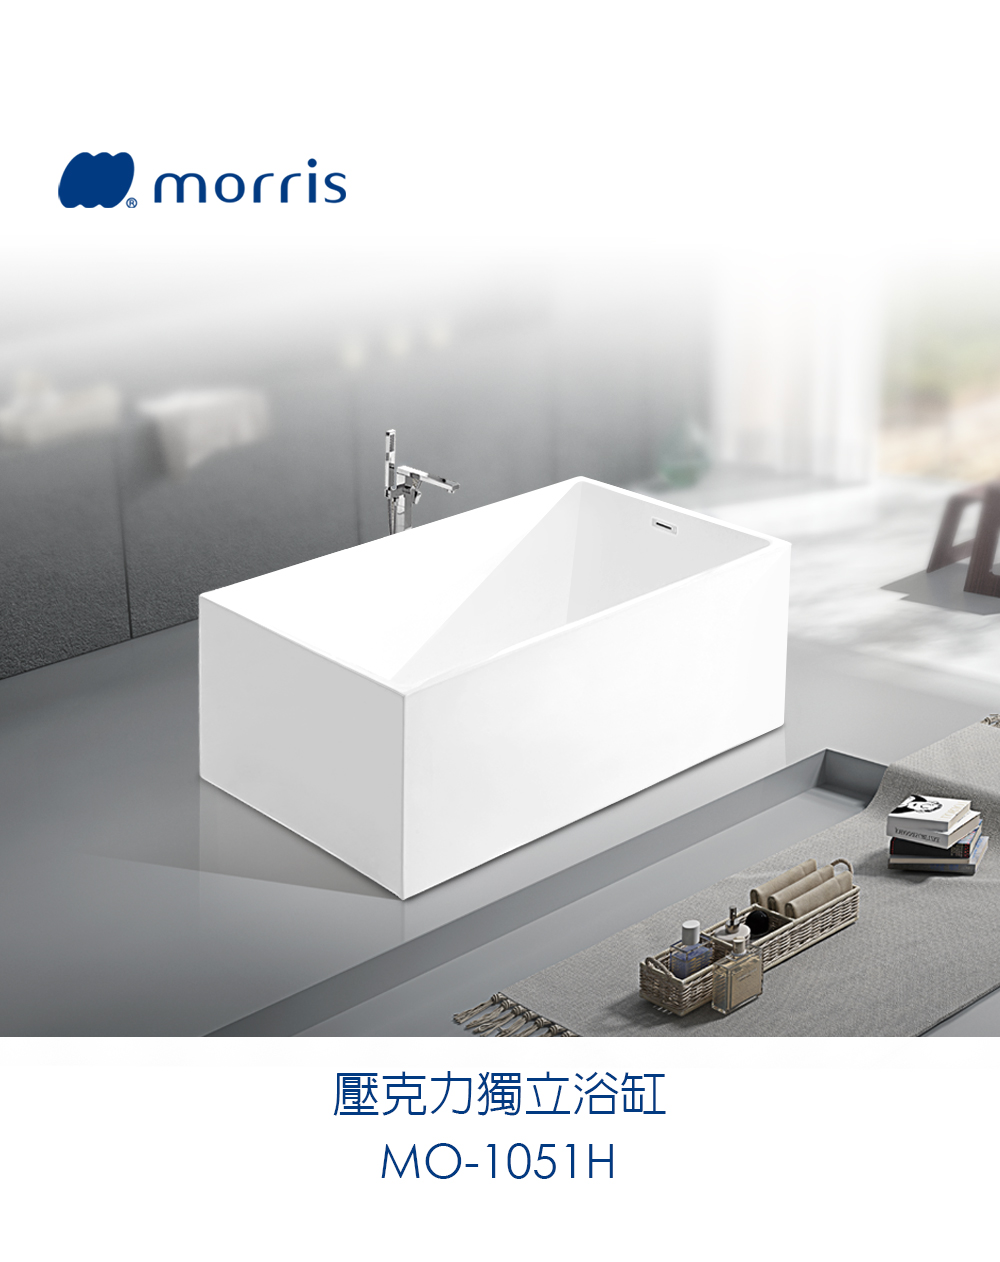 Morris 壓克力獨立浴缸(MO-1051H)品牌優惠